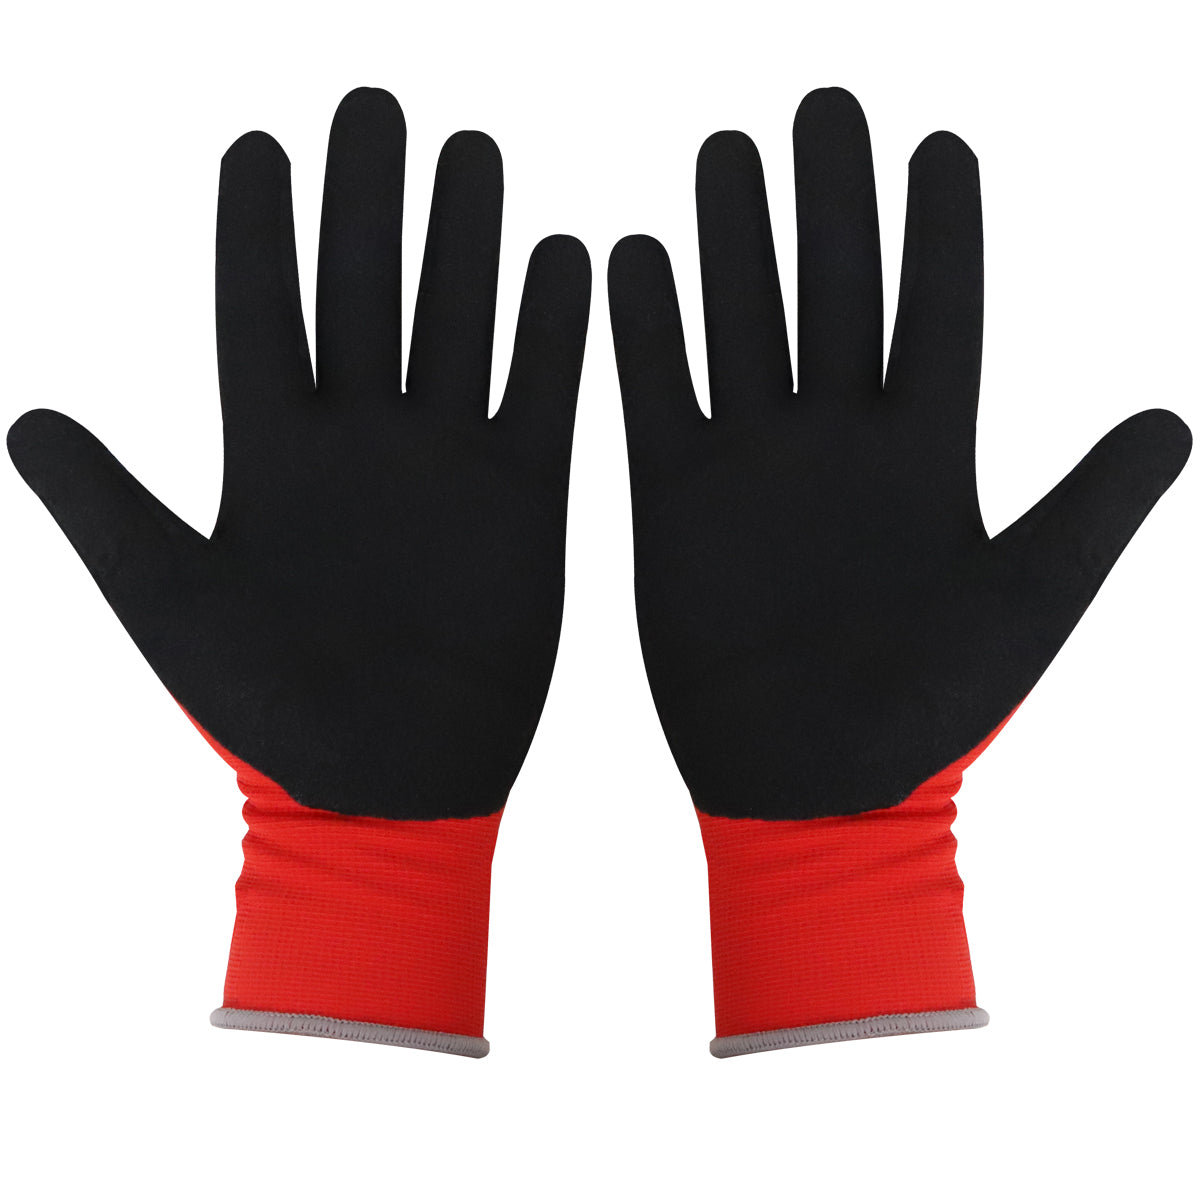 Excel Pro-Series Builder Gloves Red & Black Size XL